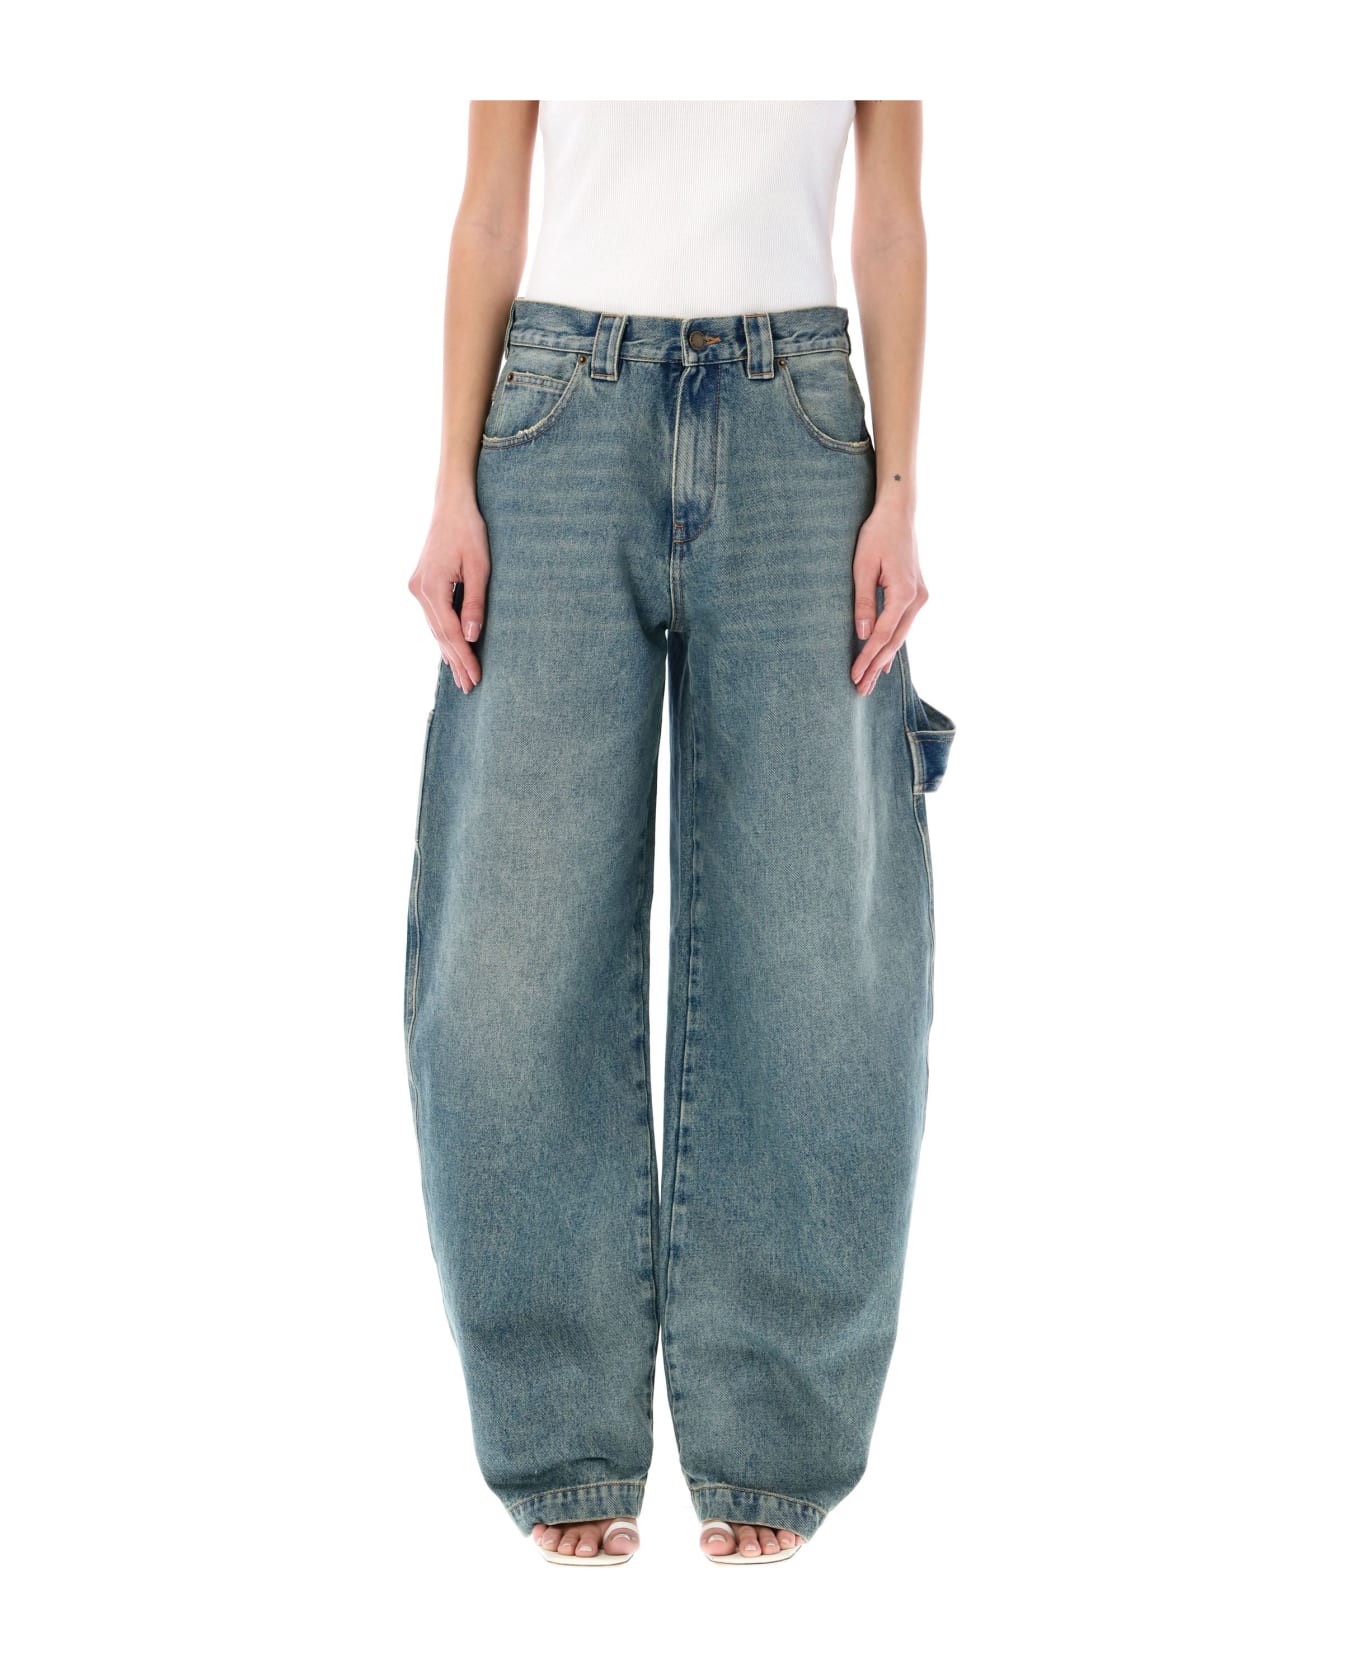 DARKPARK Audrey Barrel Leg Carpenter Jeans - SAND WASH BLUE